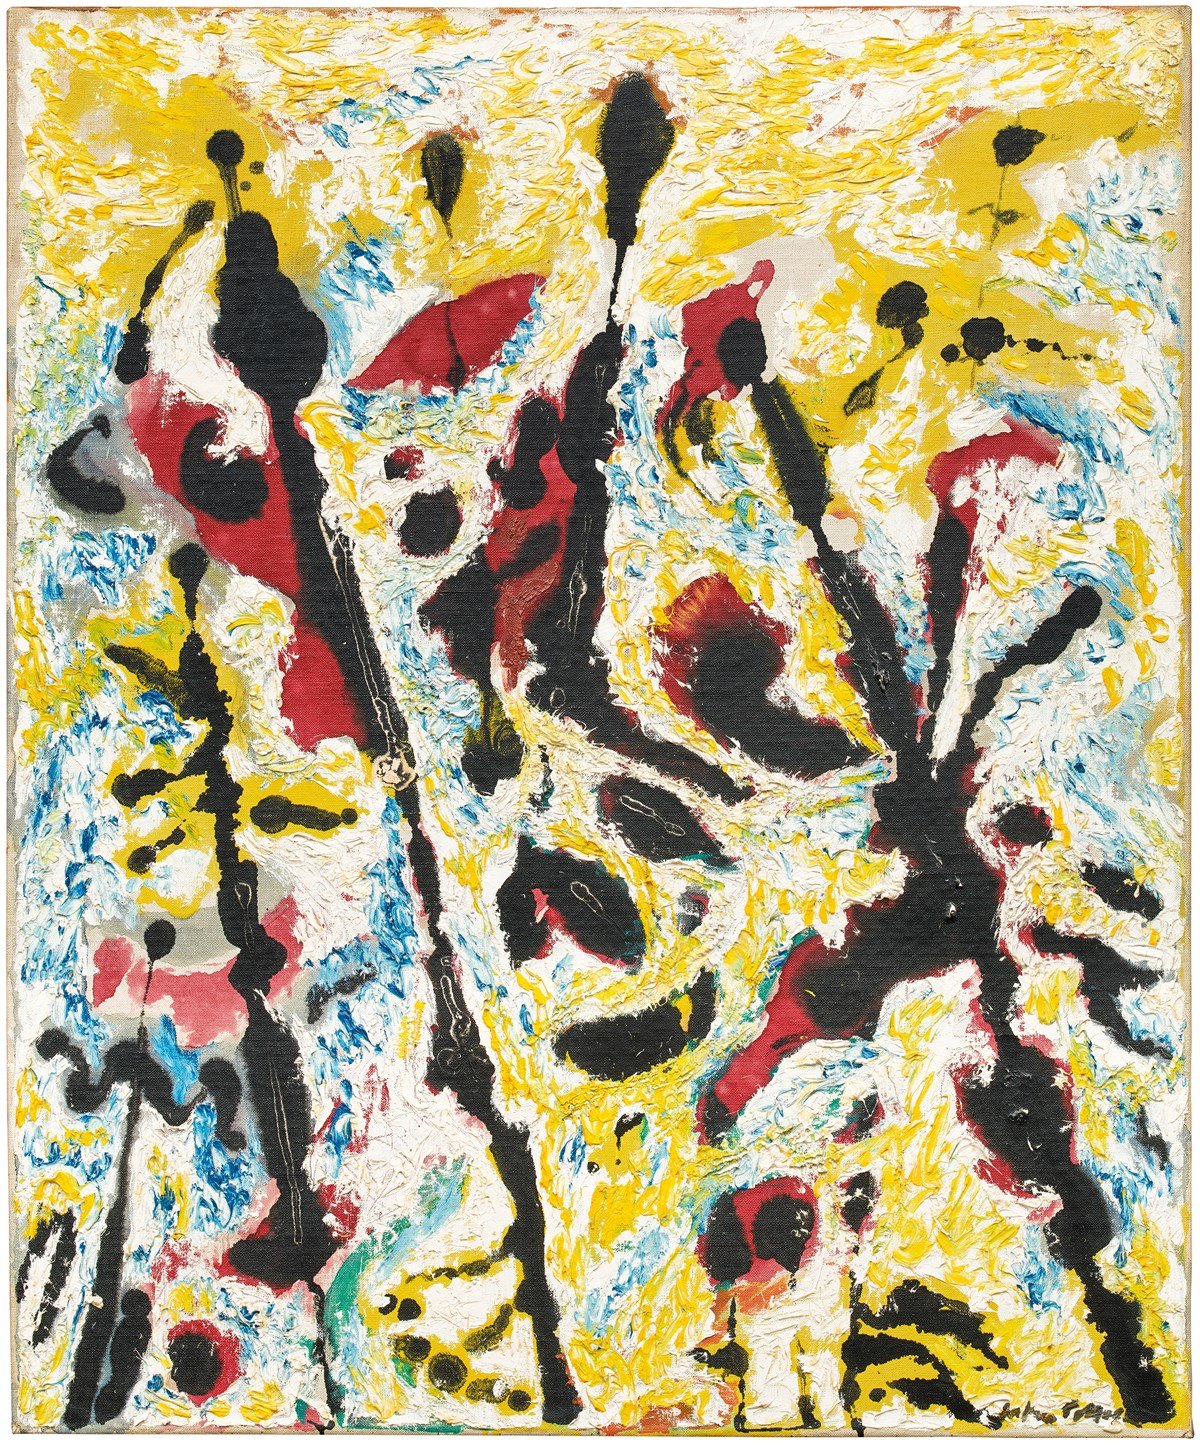 Jackson Pollock Biography, Artworks & Exhibitions Ocula Artist